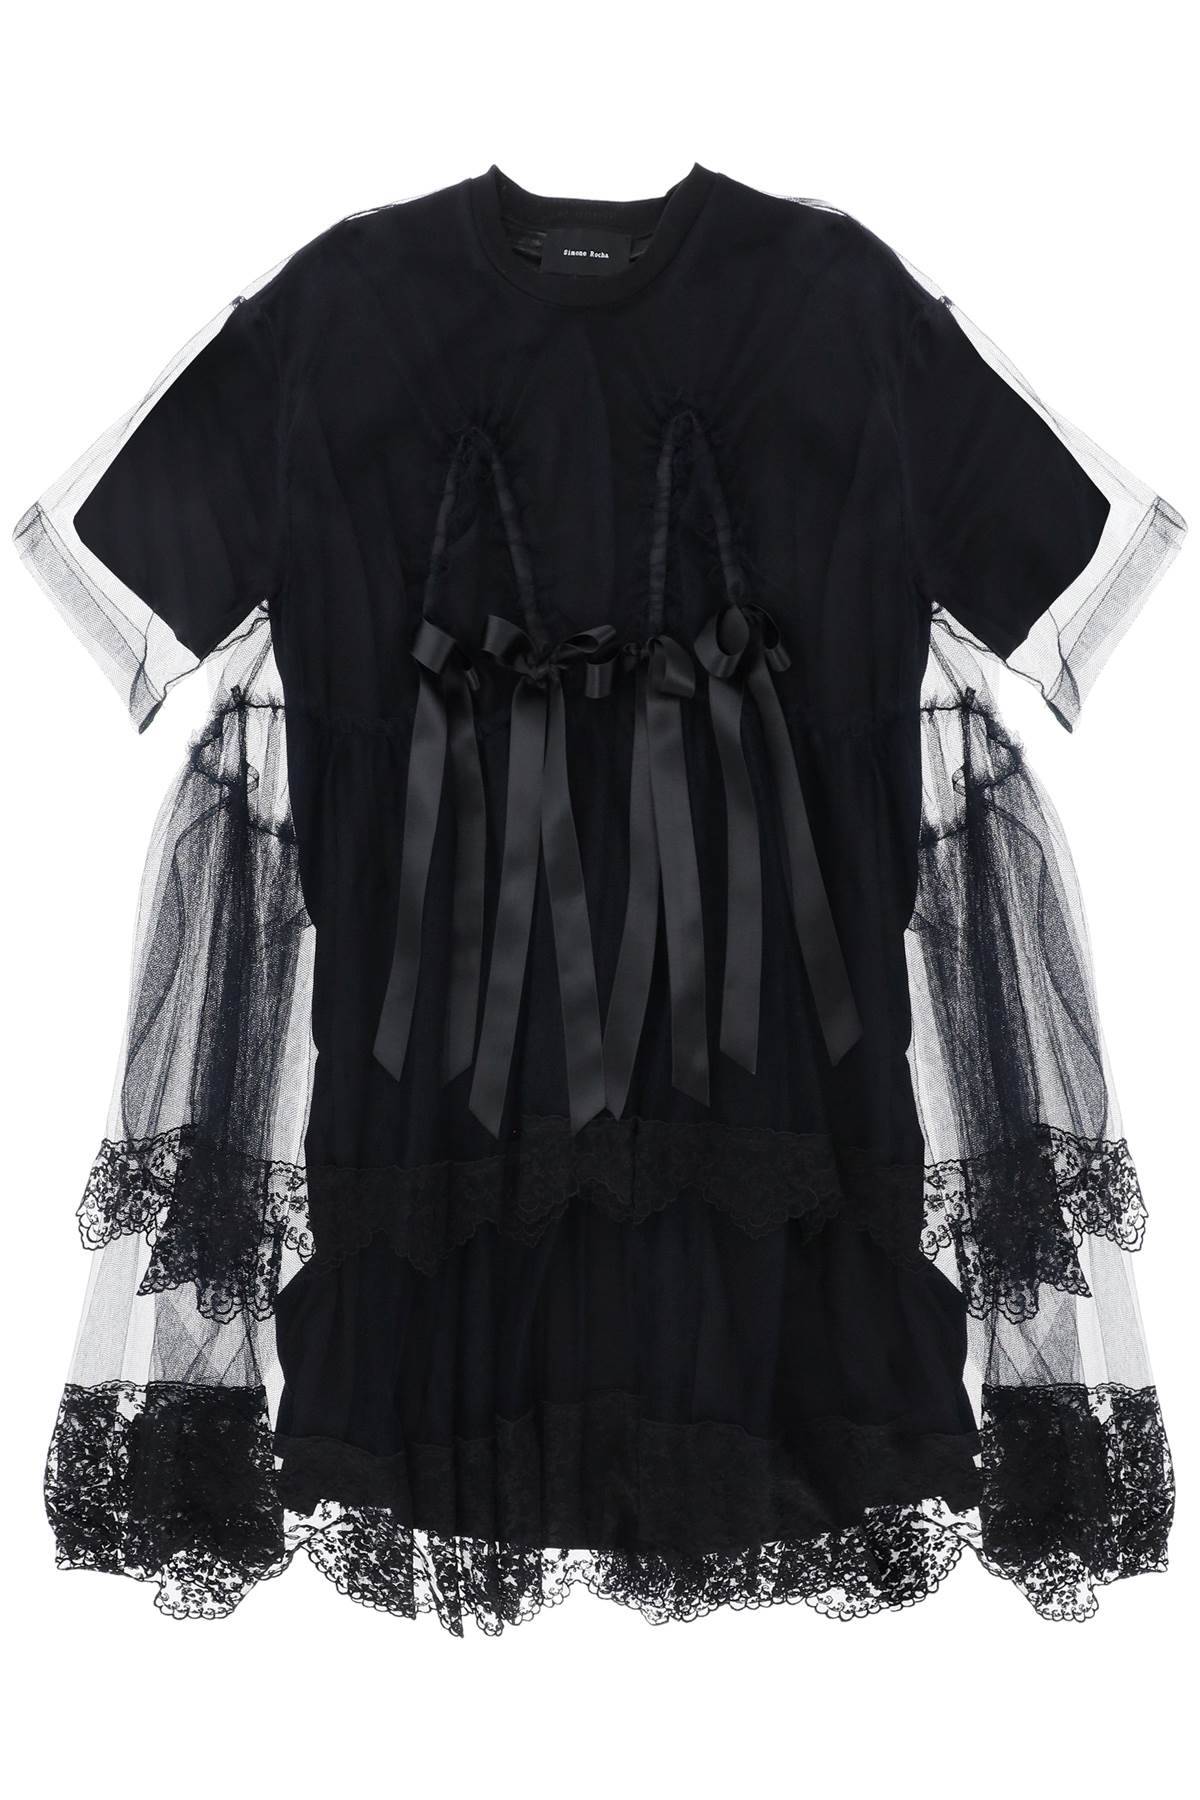 Simone Rocha SIMONE ROCHA midi dress in mesh with lace and bows